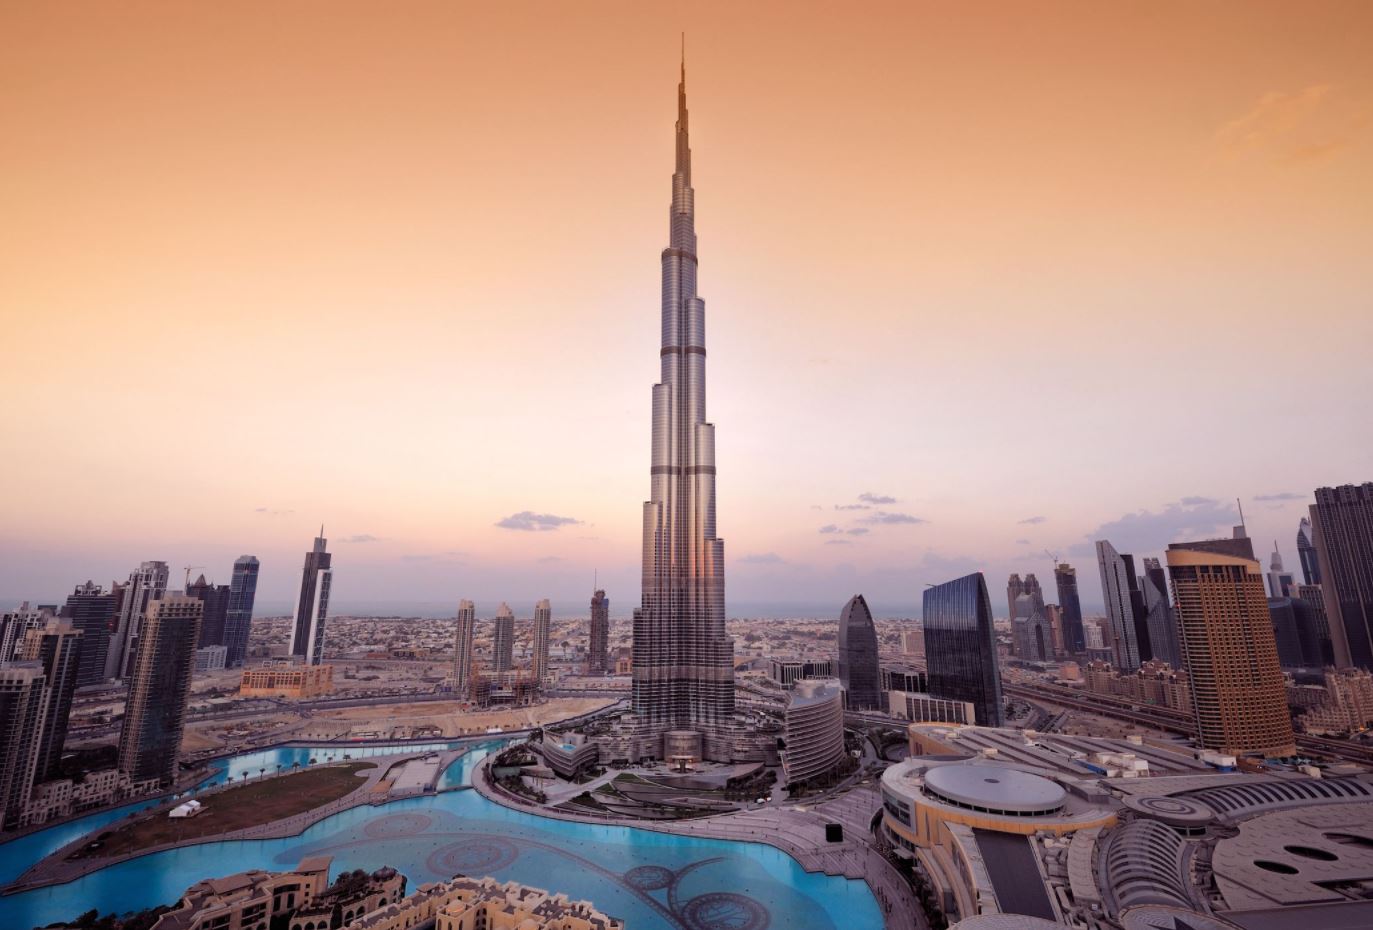 najvise zgrade na svetu